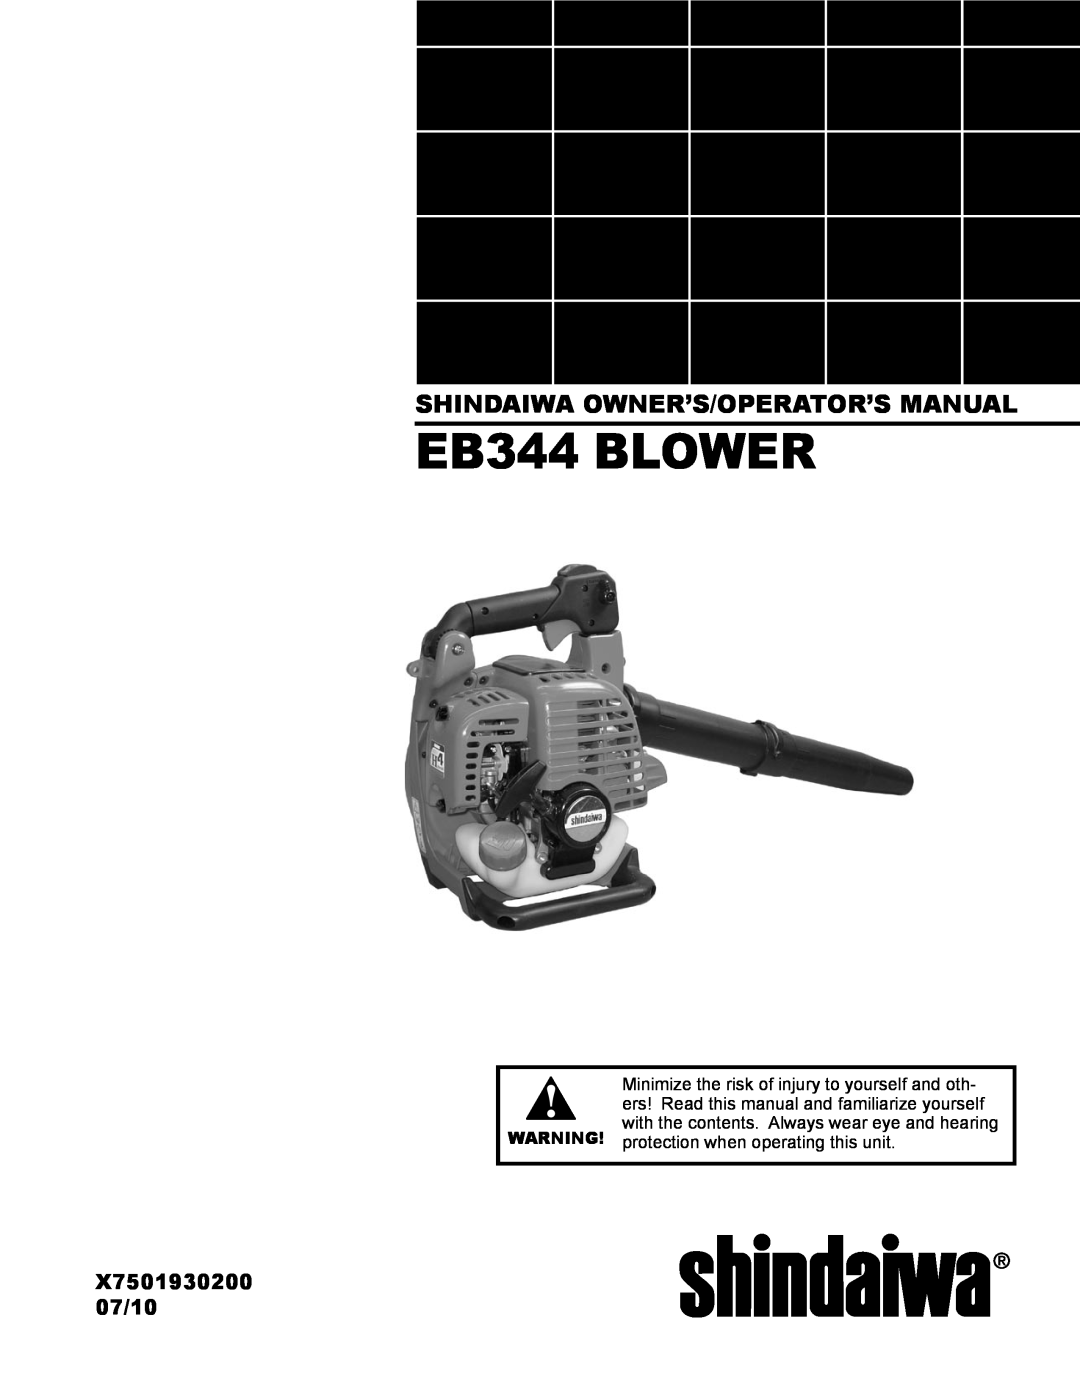 Shindaiwa EB344EF13 manual X7501930200 07/10, EB344 BLOWER, Shindaiwa Owner’S/Operator’S Manual 